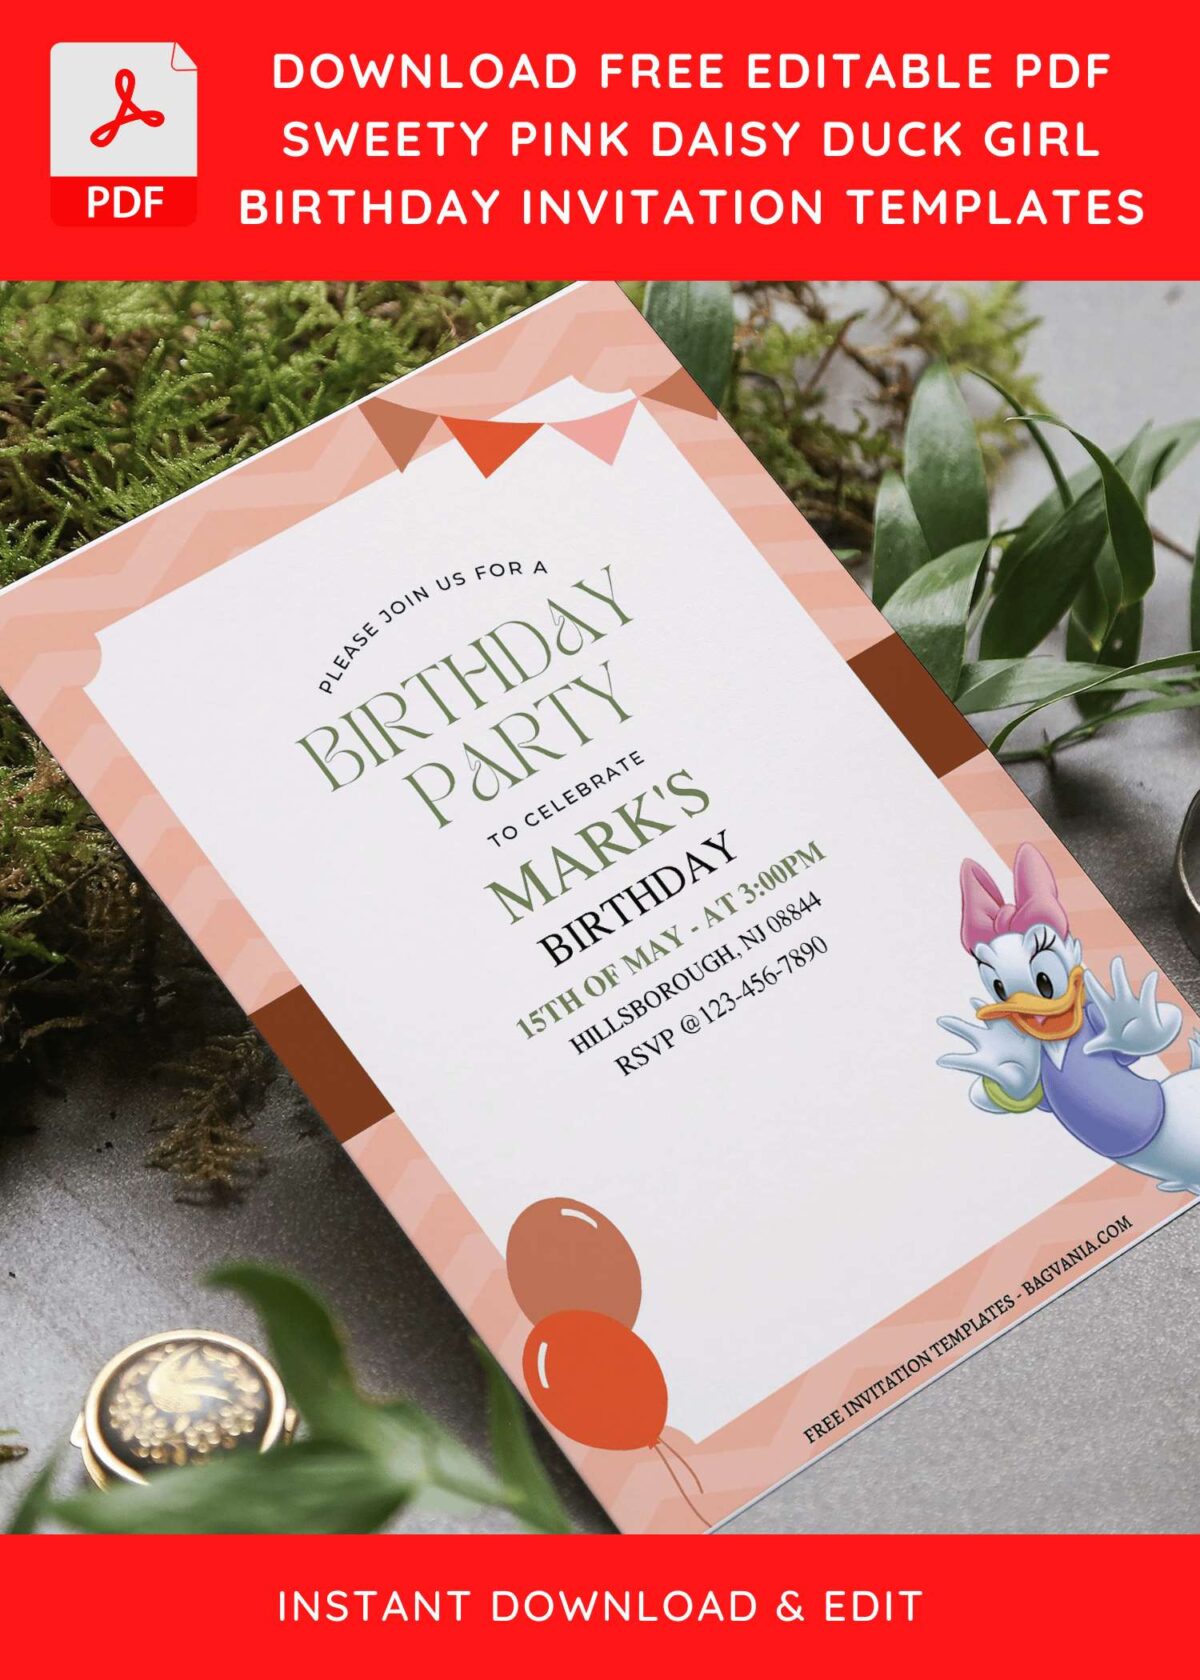 (Free Editable PDF) Cute & Chic Disney Daisy Duck Birthday Invitation Templates F